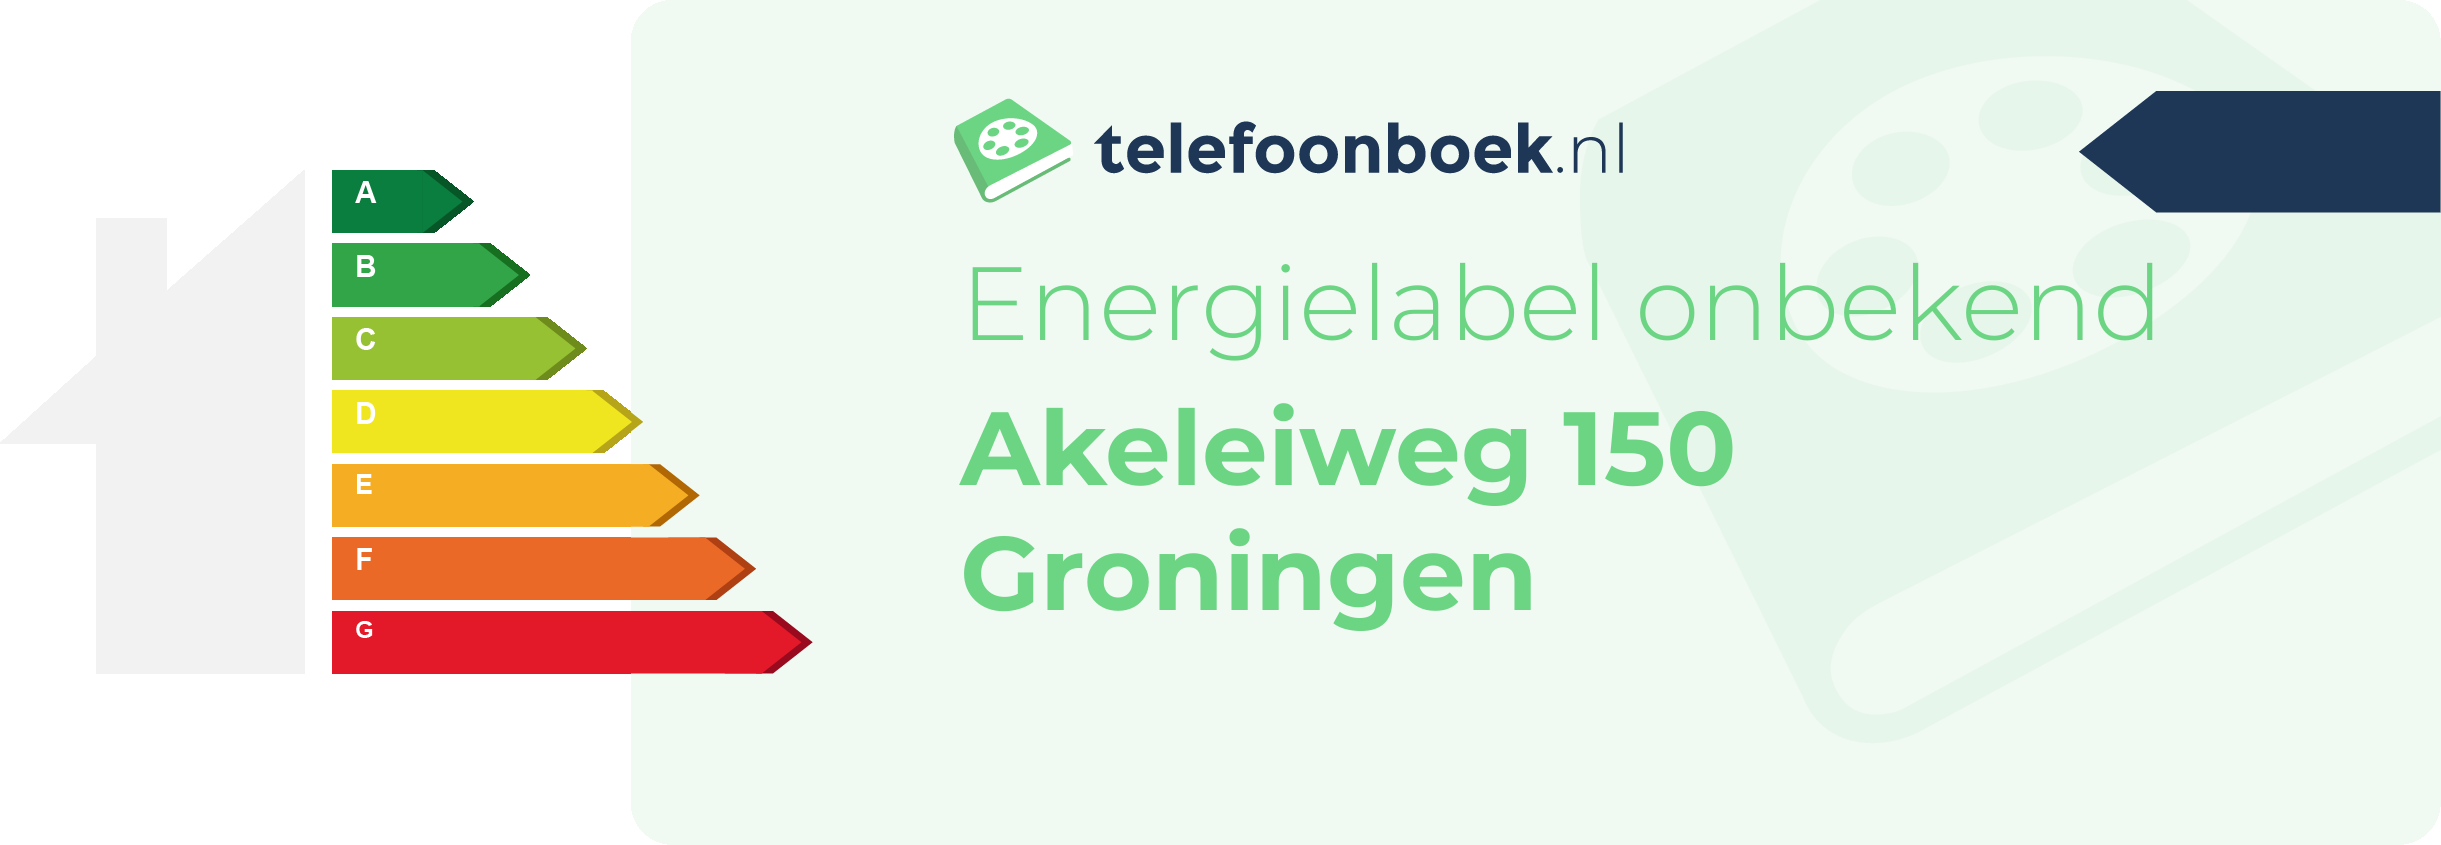 Energielabel Akeleiweg 150 Groningen